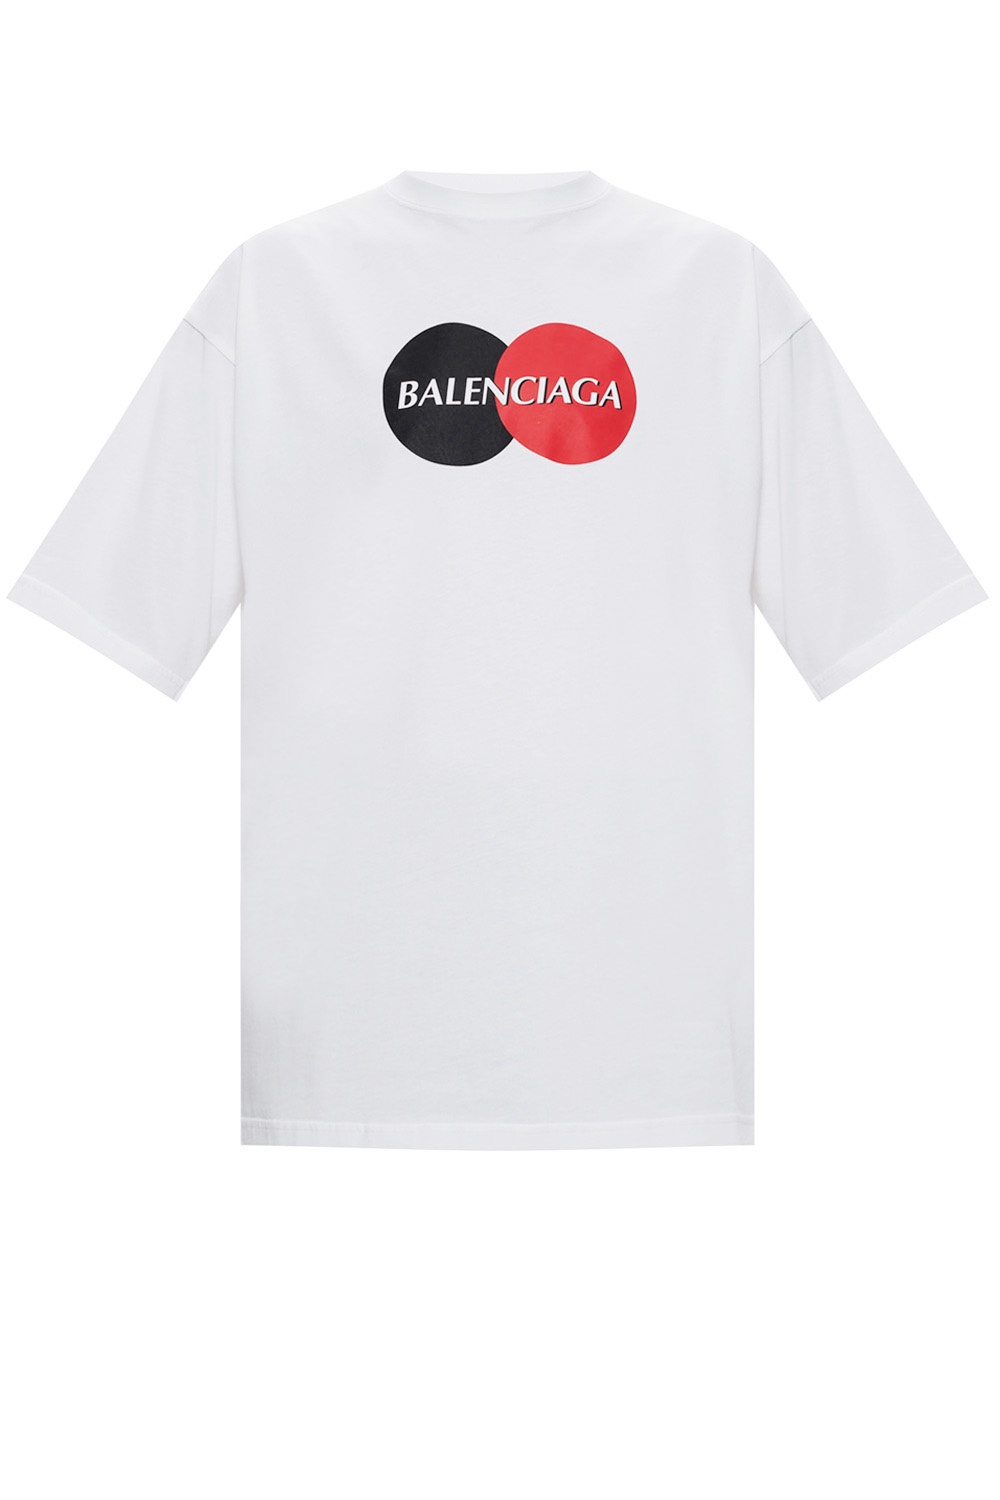 balenciaga t shirt price singapore